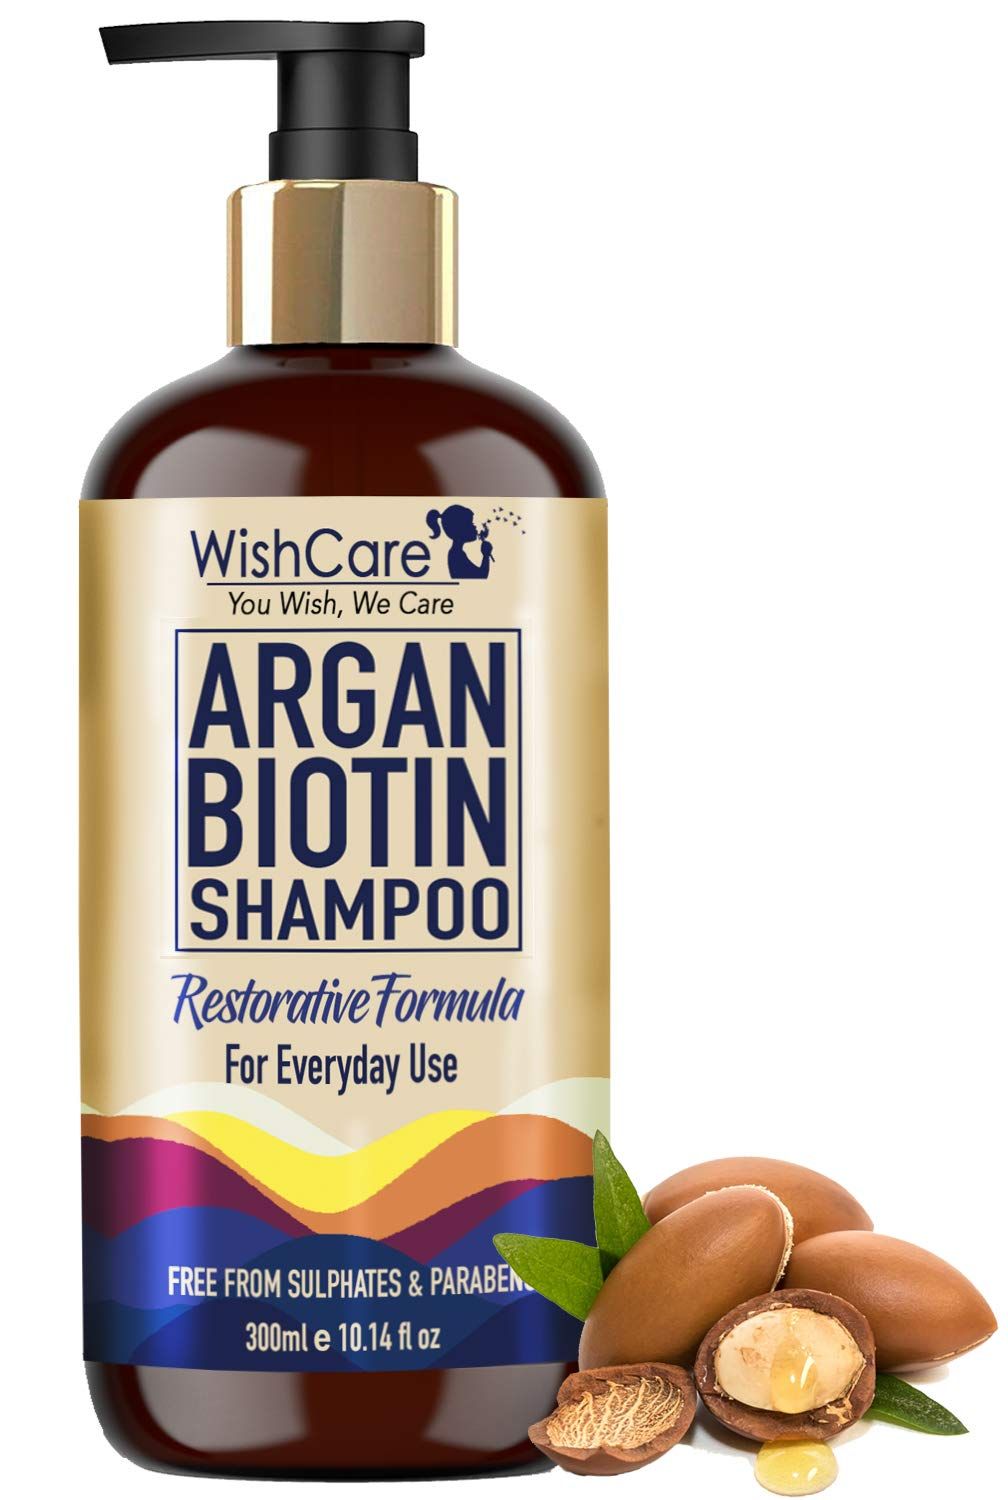 Buy WishCare Argan Biotin Shampoo - Restorative Formula for Everyday Use - Free from Sulphates & Parabens (300 ml) - Purplle